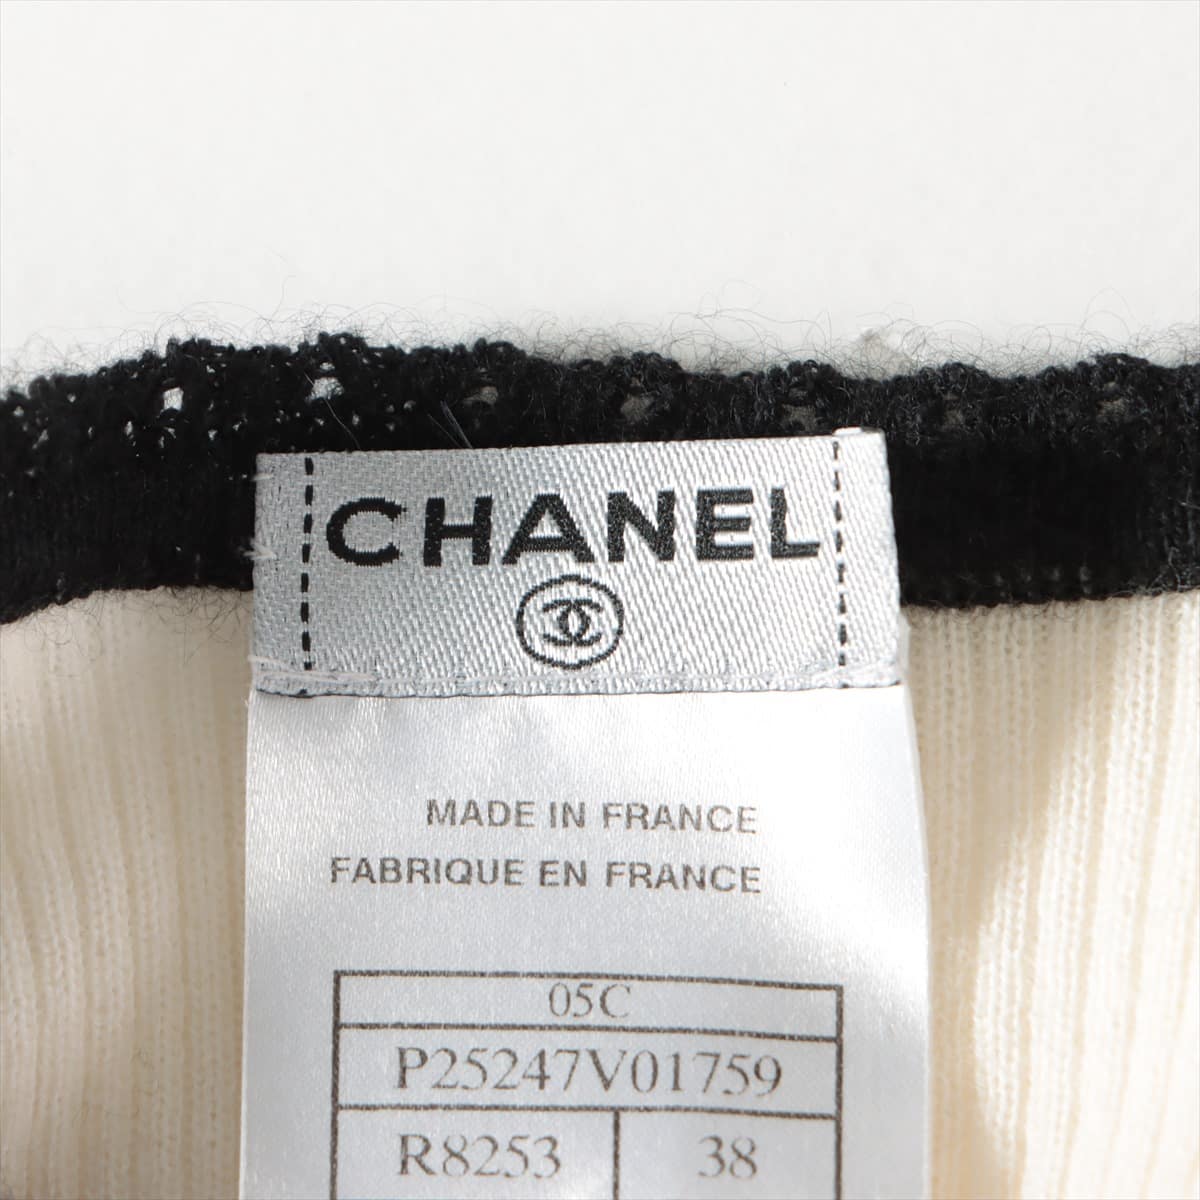 Chanel Coco Mark 05C Cotton x Cashmere Short Sleeve Knitwear 38 Ladies' White